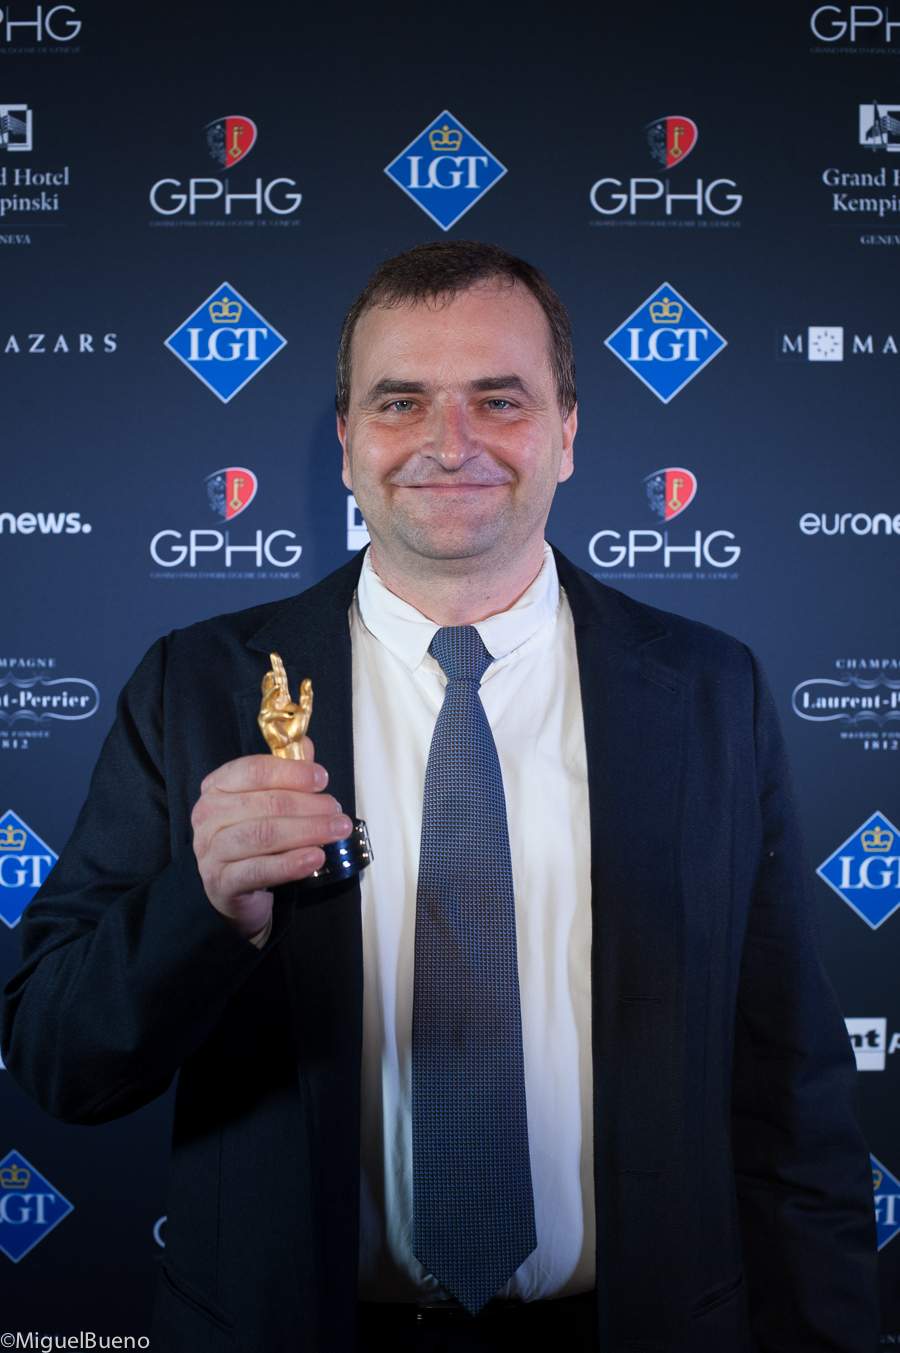 Uwe Ahrendt, CEO of Nomos Glashütte, winner of the Challenge Watch Prize 2018